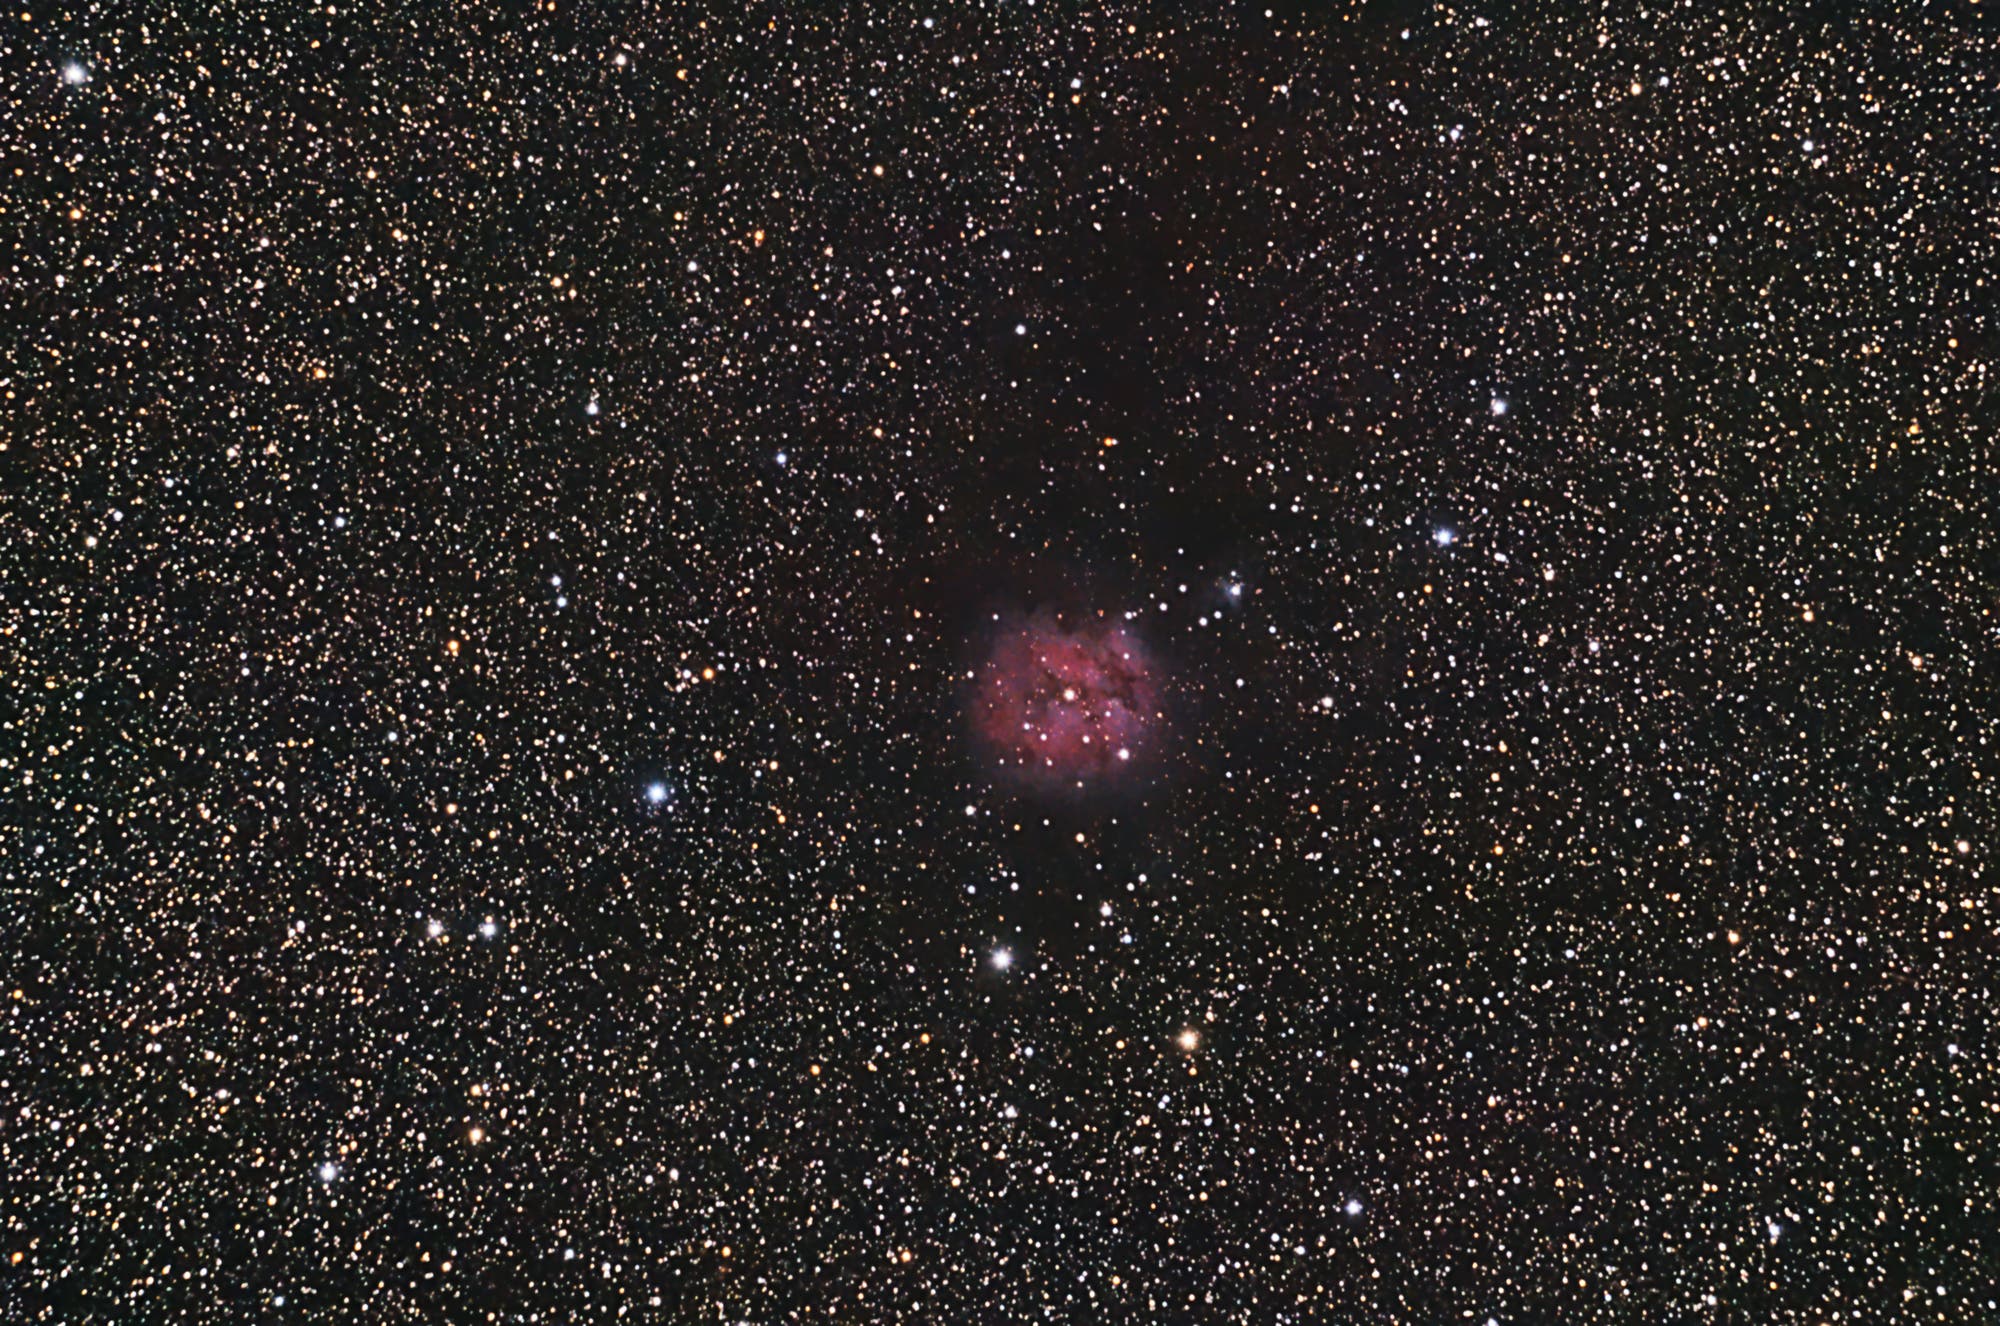  Cocoon nebula, IC 5146